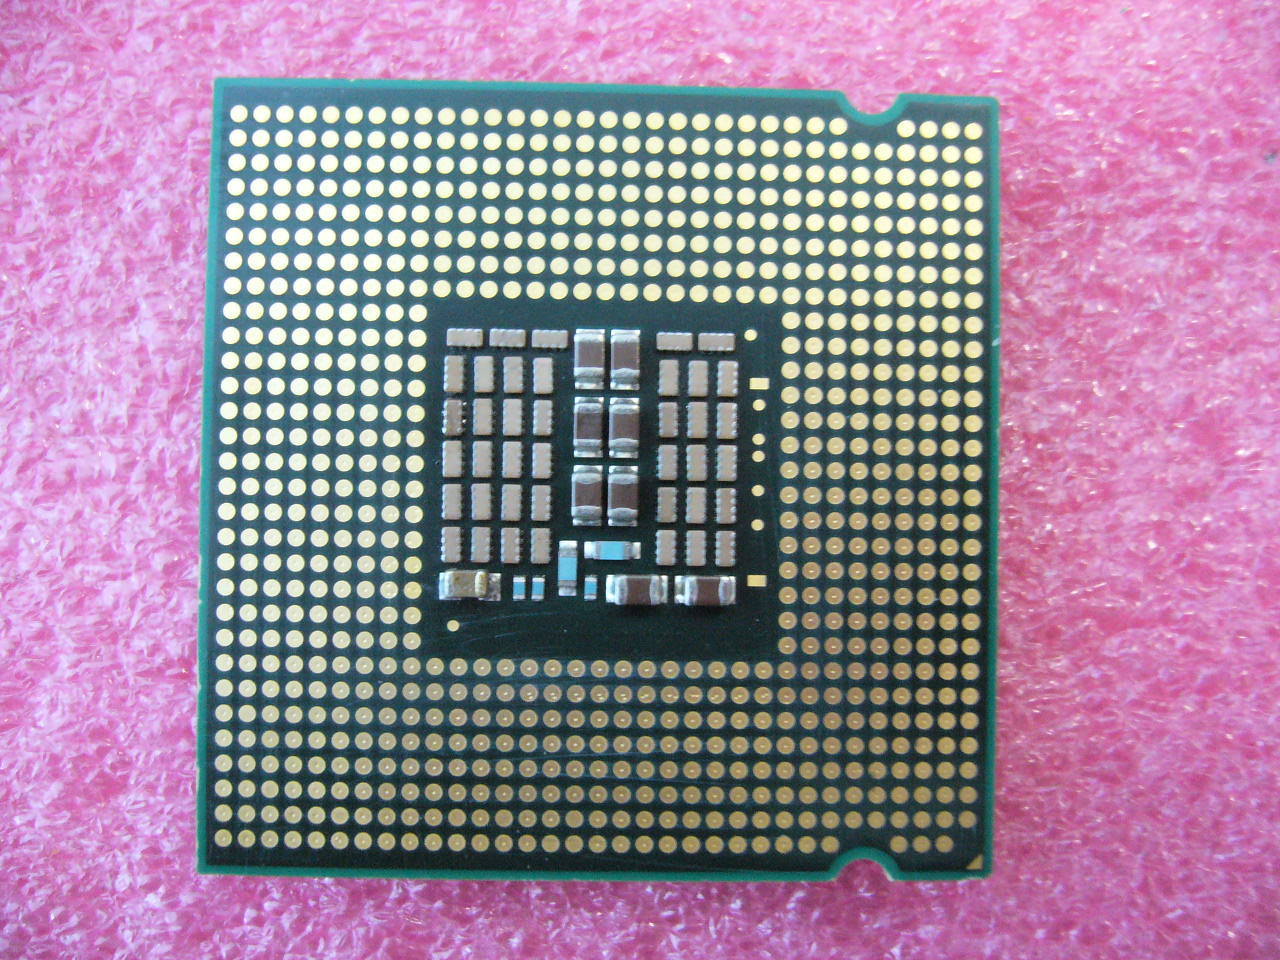 QTY 1x INTEL Quad Cores Q9550 CPU 2.83GHz/12MB/1333Mhz LGA775 SLB8V SLAWQ - zum Schließen ins Bild klicken